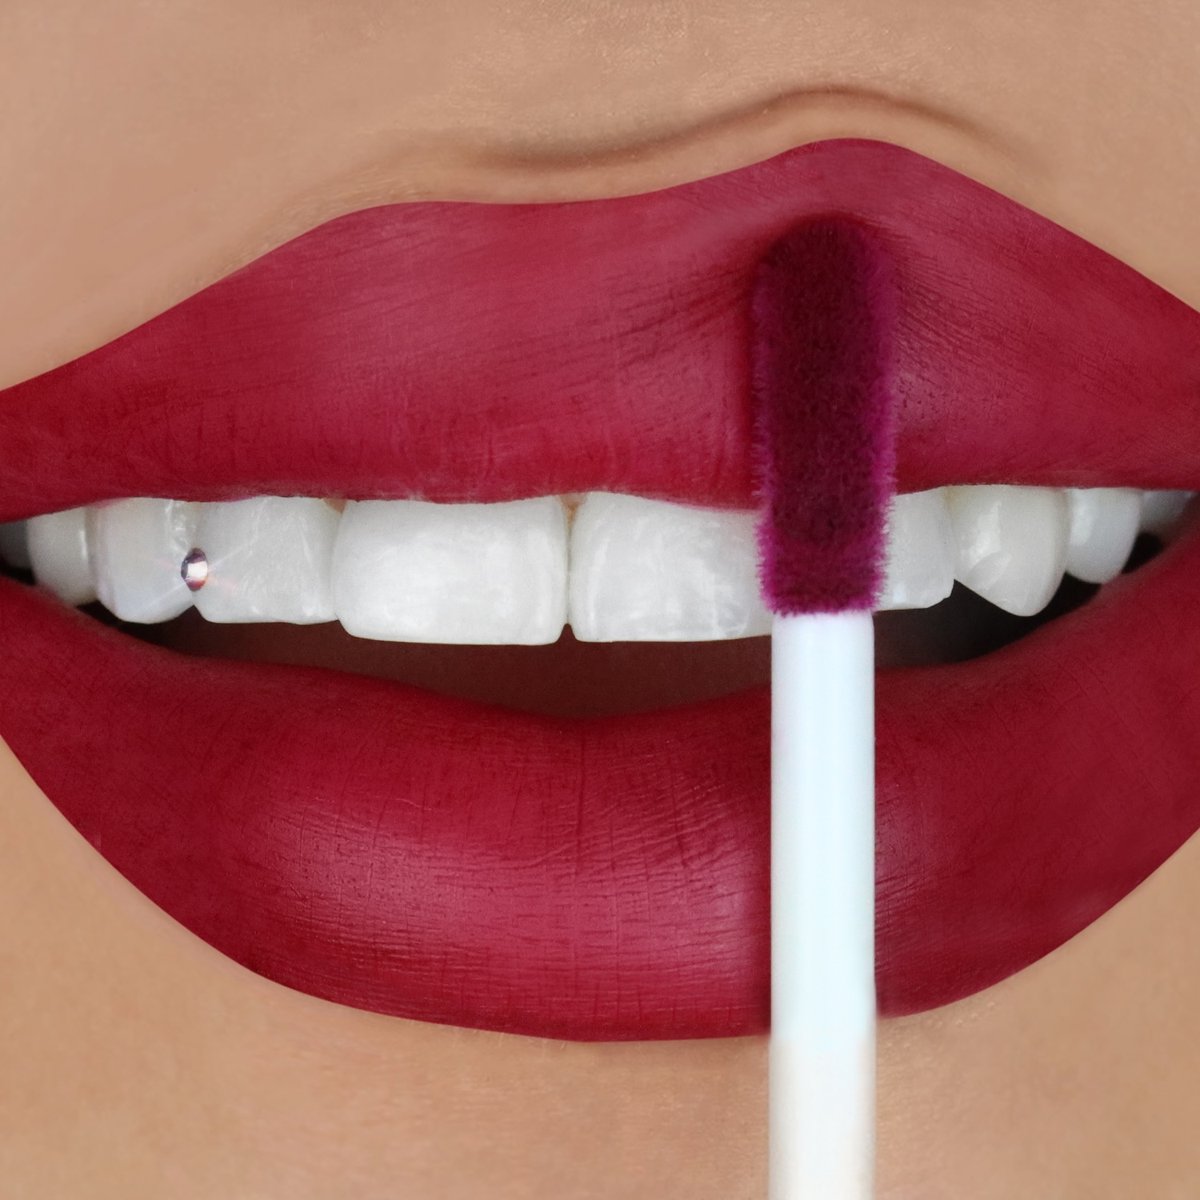 Labial Velvet Stay lip paint - Dark Side de Beauty Creations - Kosmabell